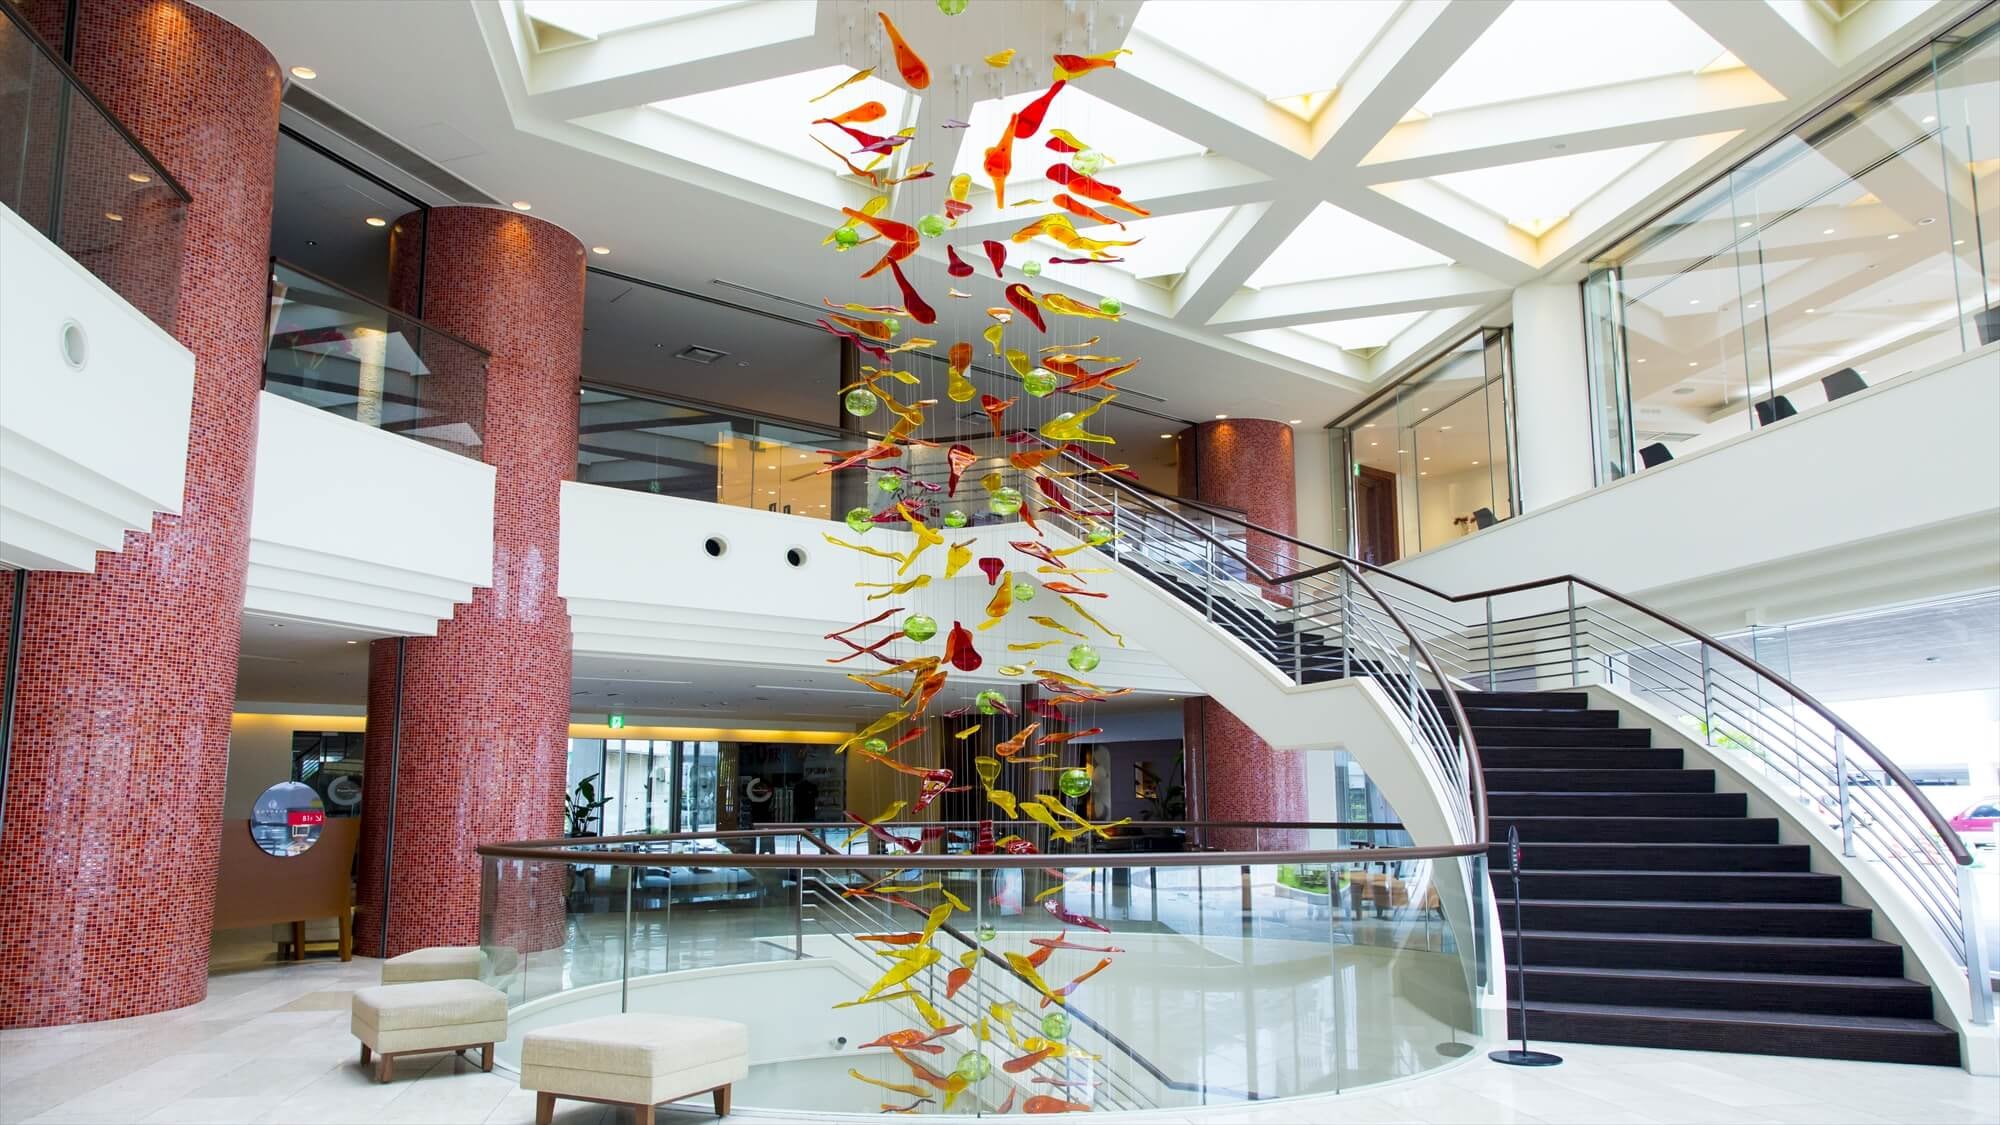 [Atrium lobby] Ryukyu glass petals are impressive